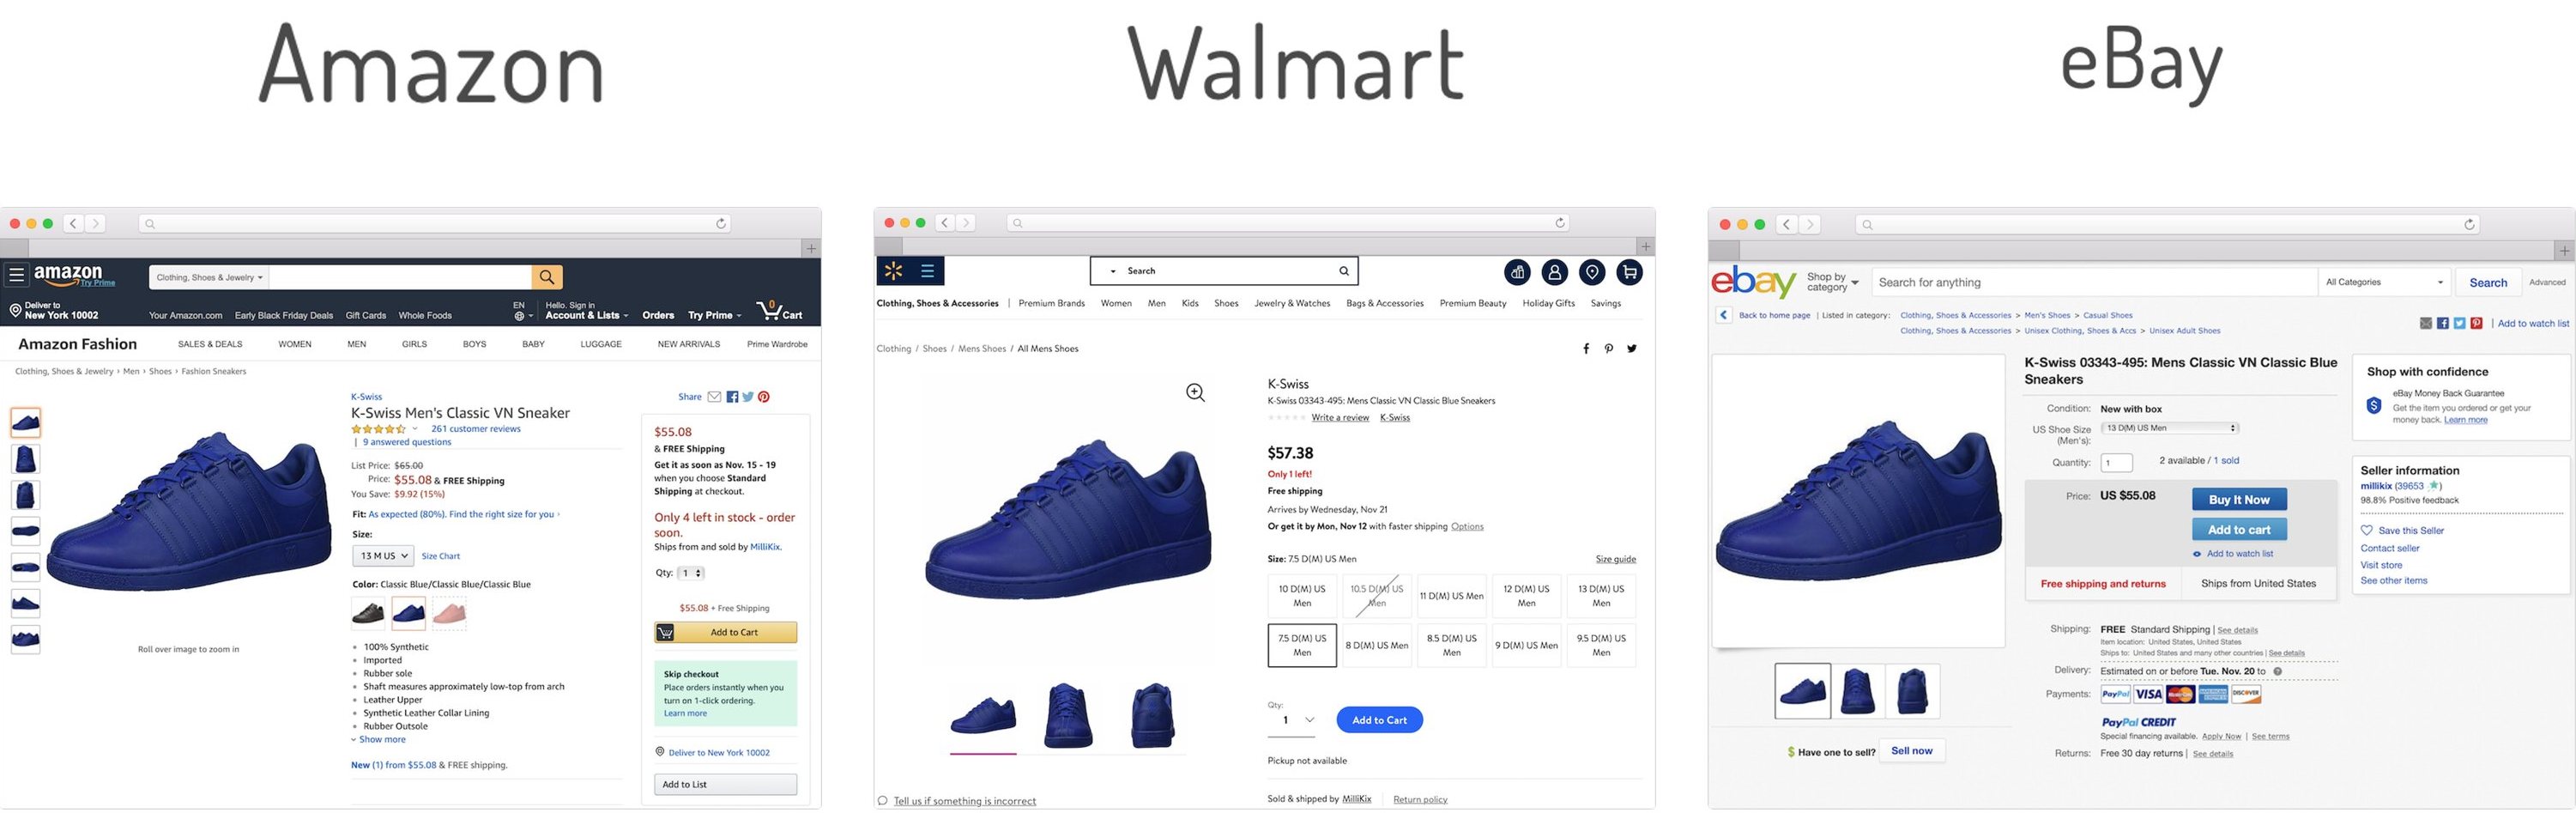 Amazon Walmart eBay marketplaces